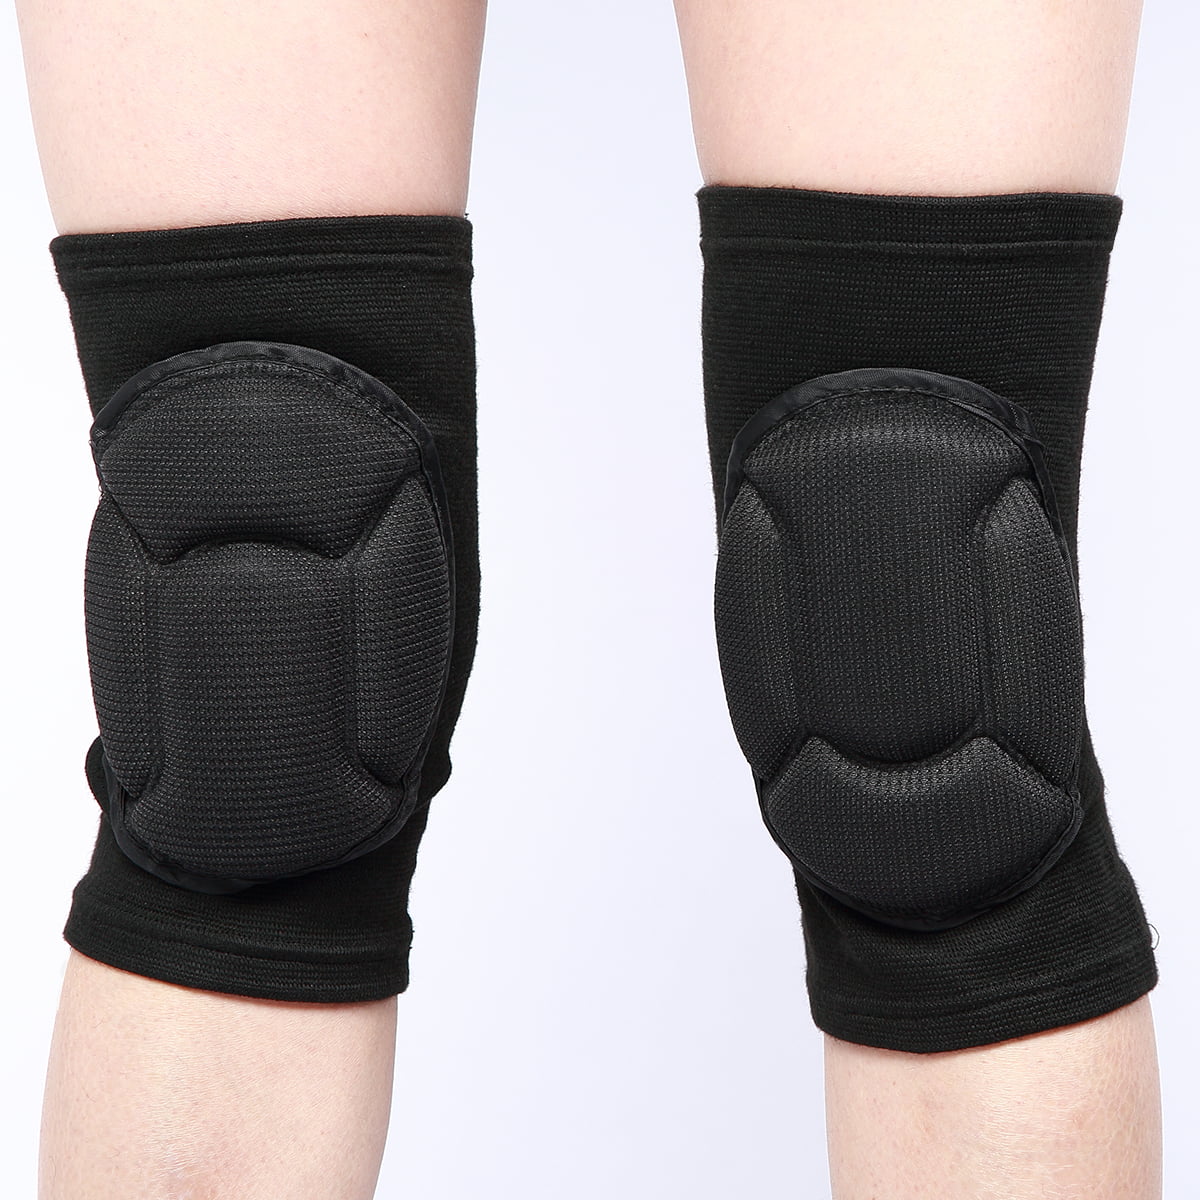 2020 New Knee Pads Kneelet Construction Work Safety Brace Leg Protectors Gear 